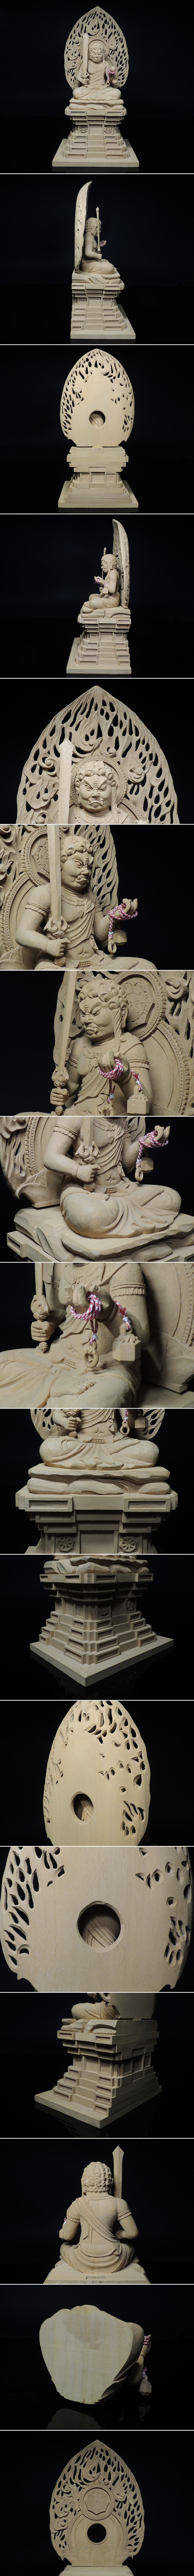 HOT最新作◆木彫り・不動明王坐仏像・天然木・国内産・検 桧 檜・高さ29㌢◆a093 仏像